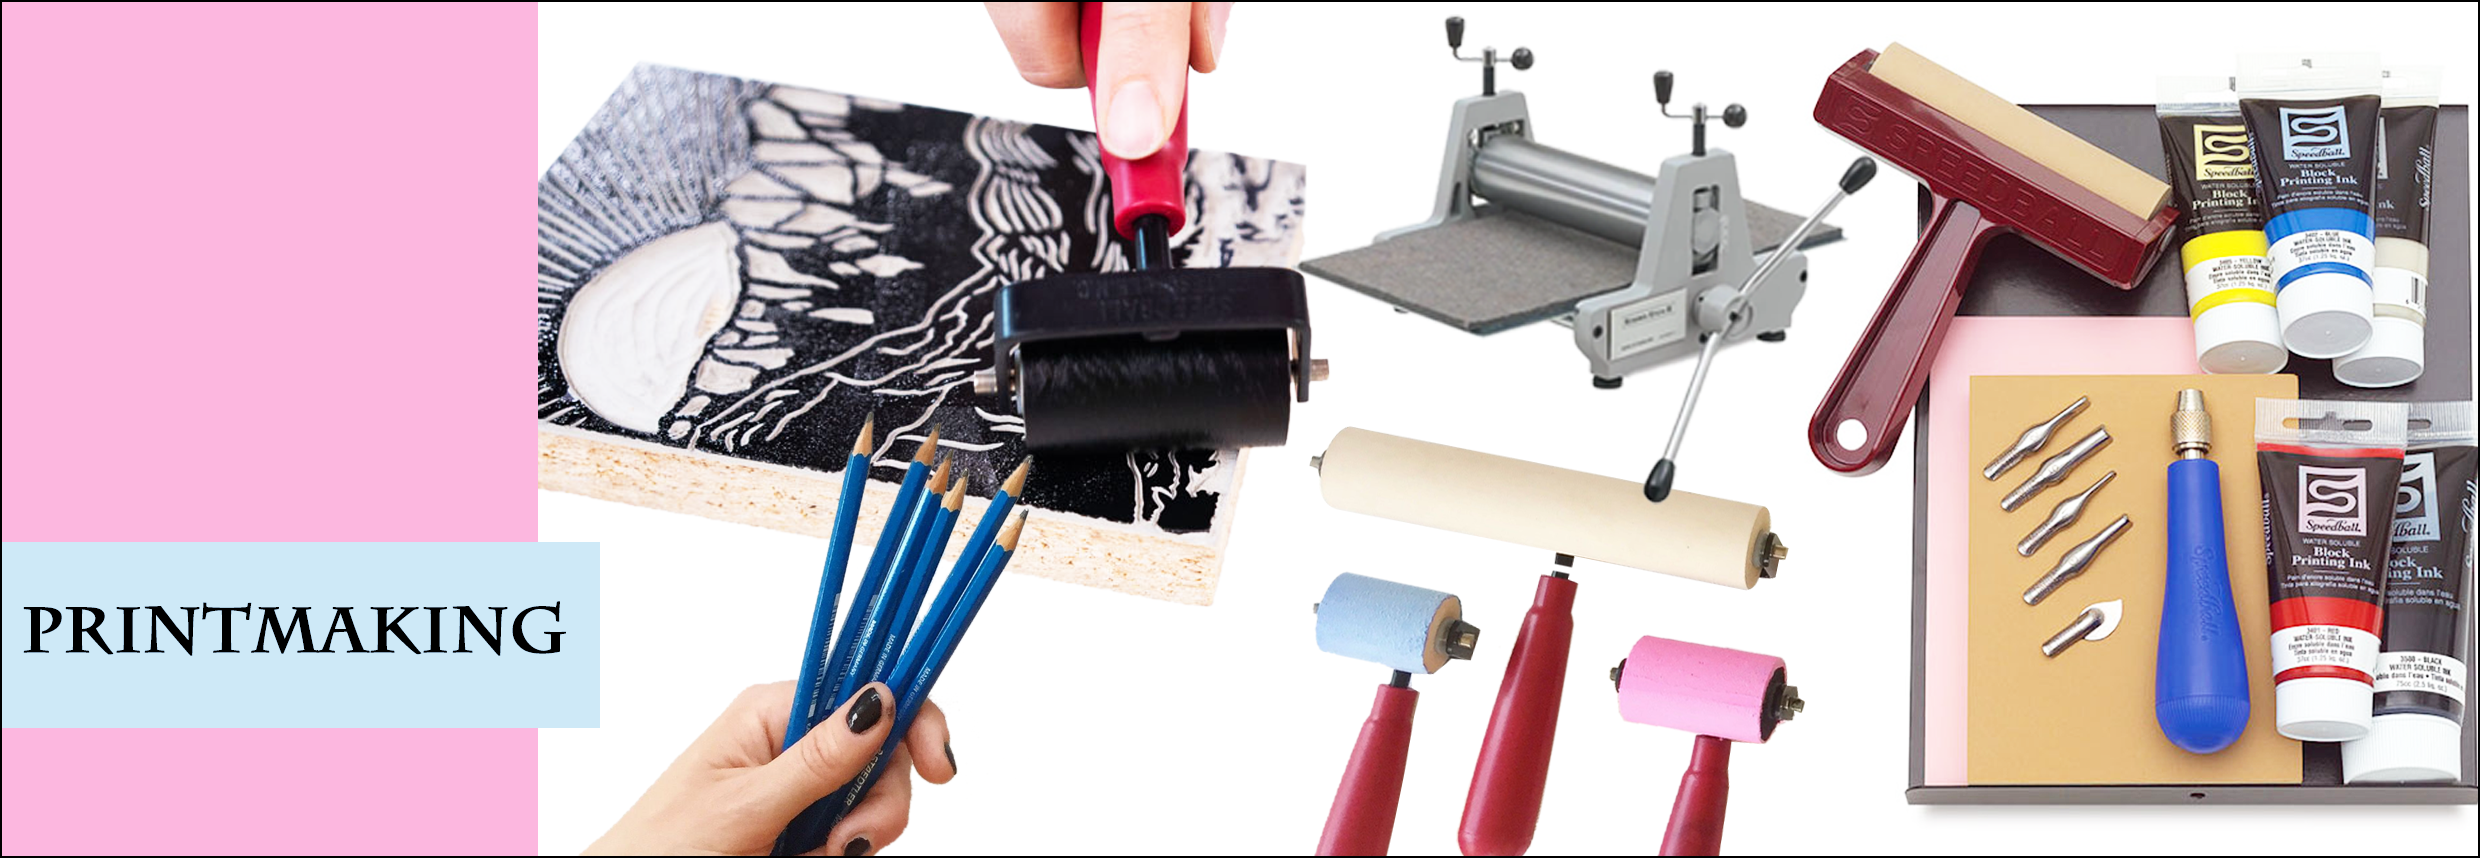 Buy Printmaking Supplies, Printing Materials & Tools